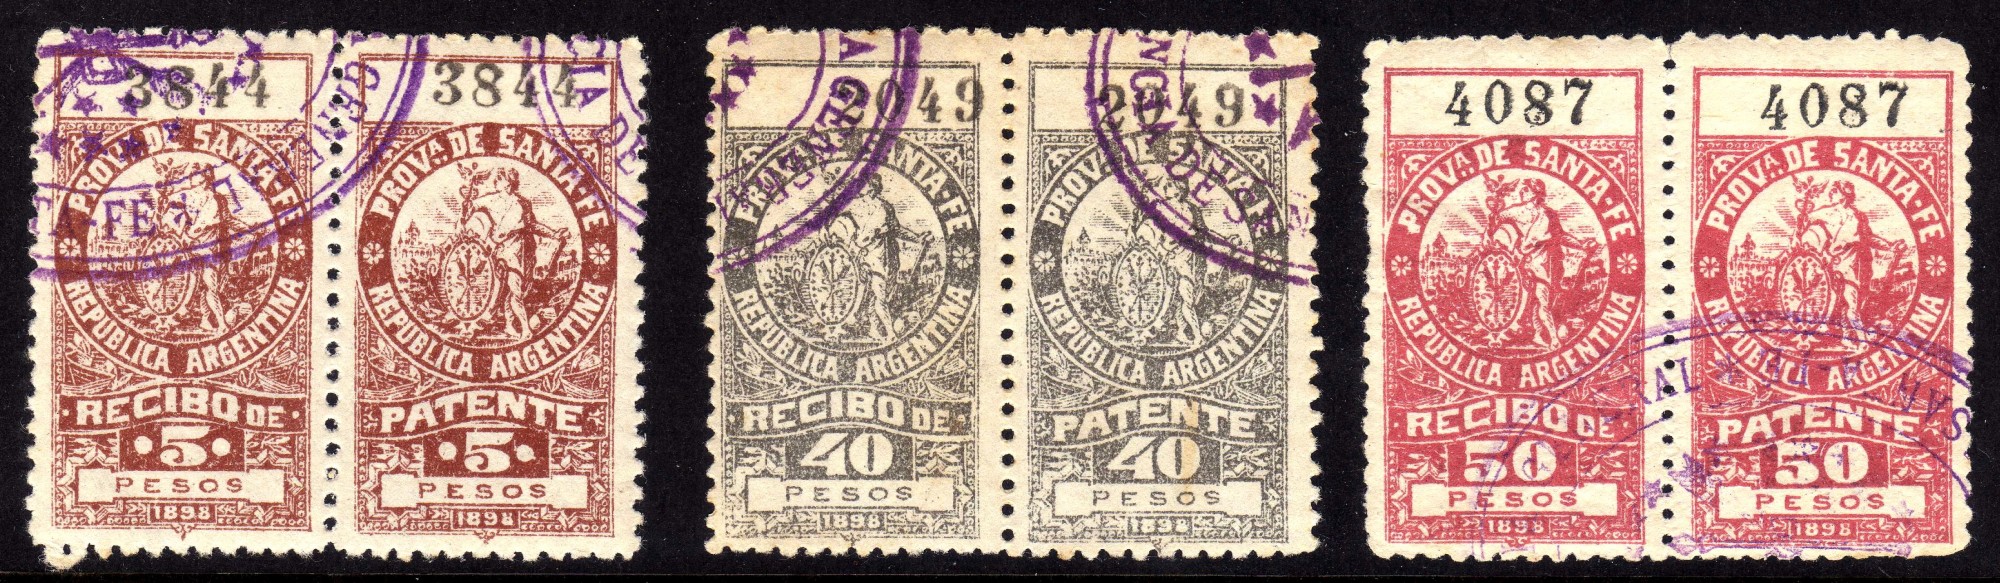 Argentina Santa Fe Revenue Stamps